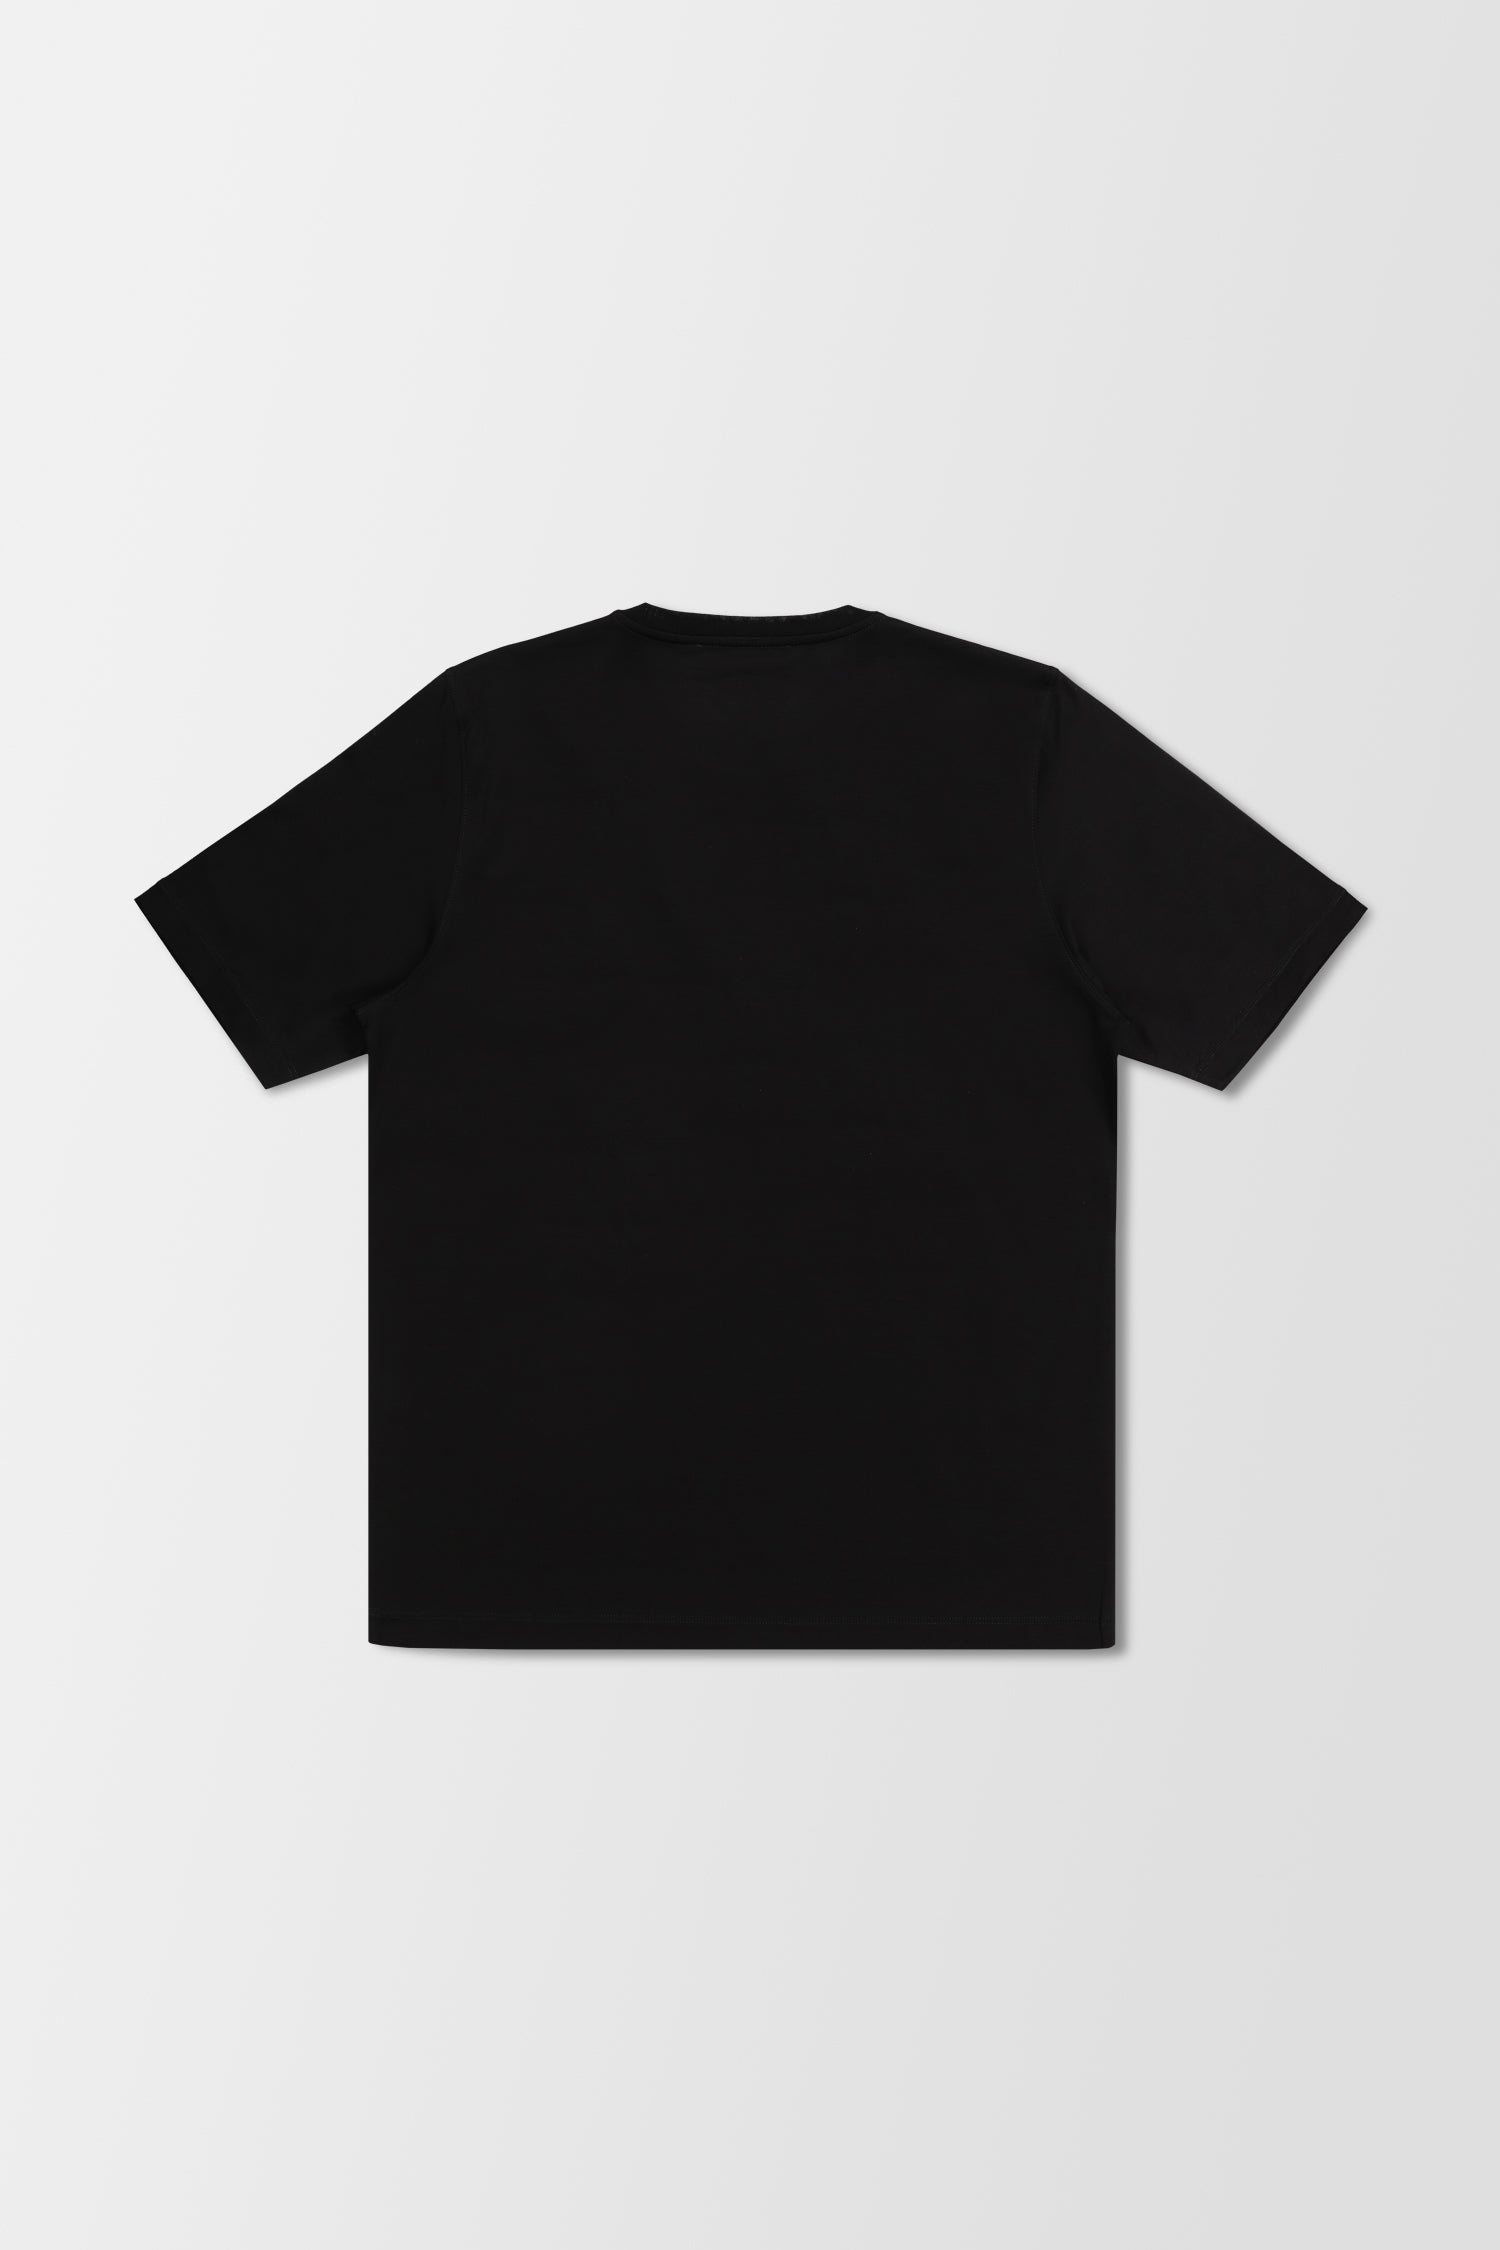 Zilli Black/Bordeaux T-Shirt